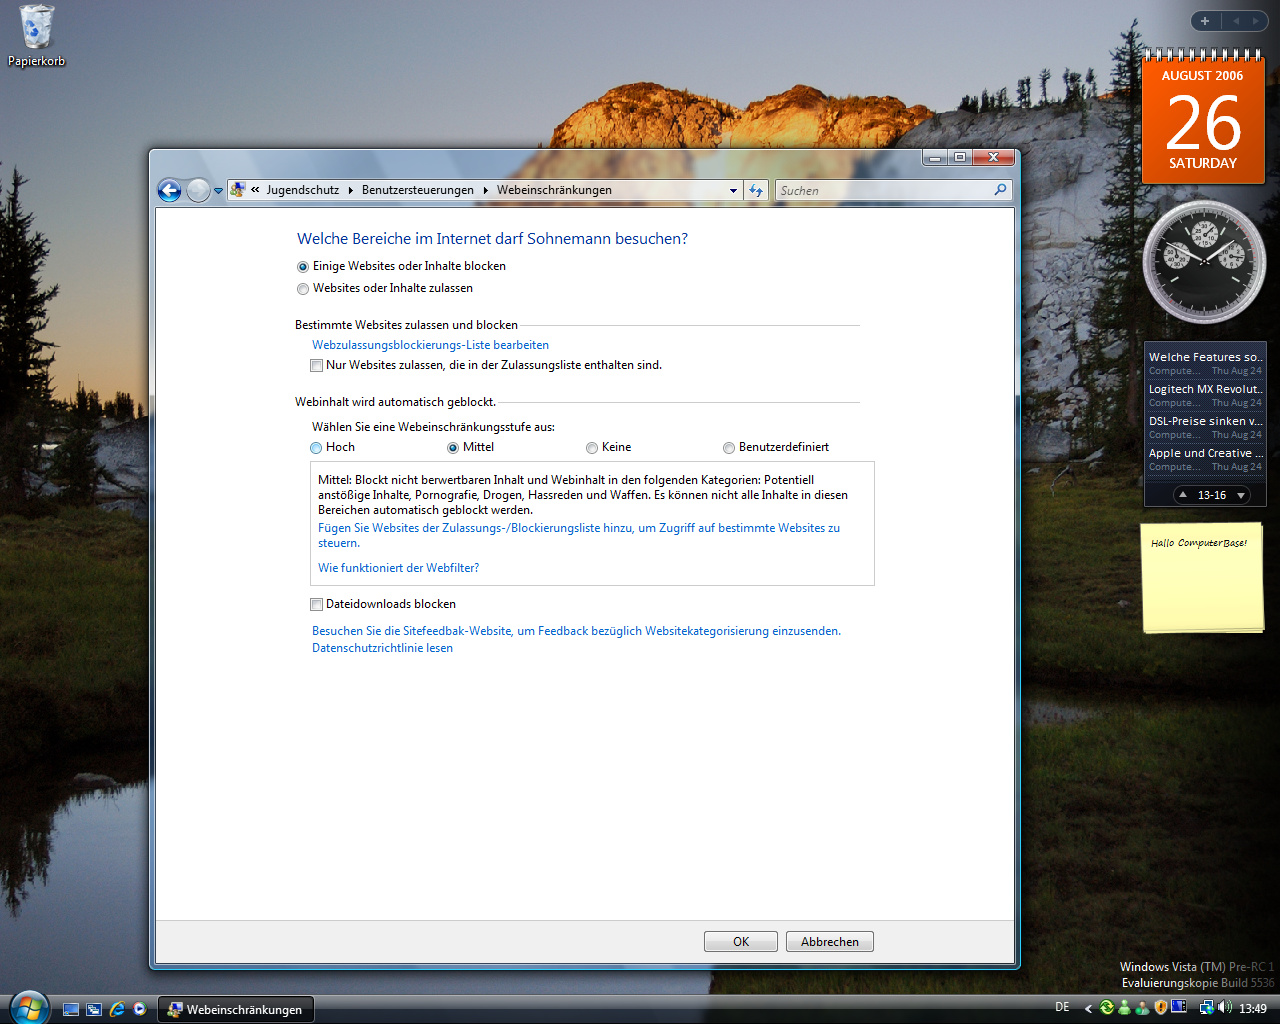 Windows Vista Build 5536 - Jugendschutz